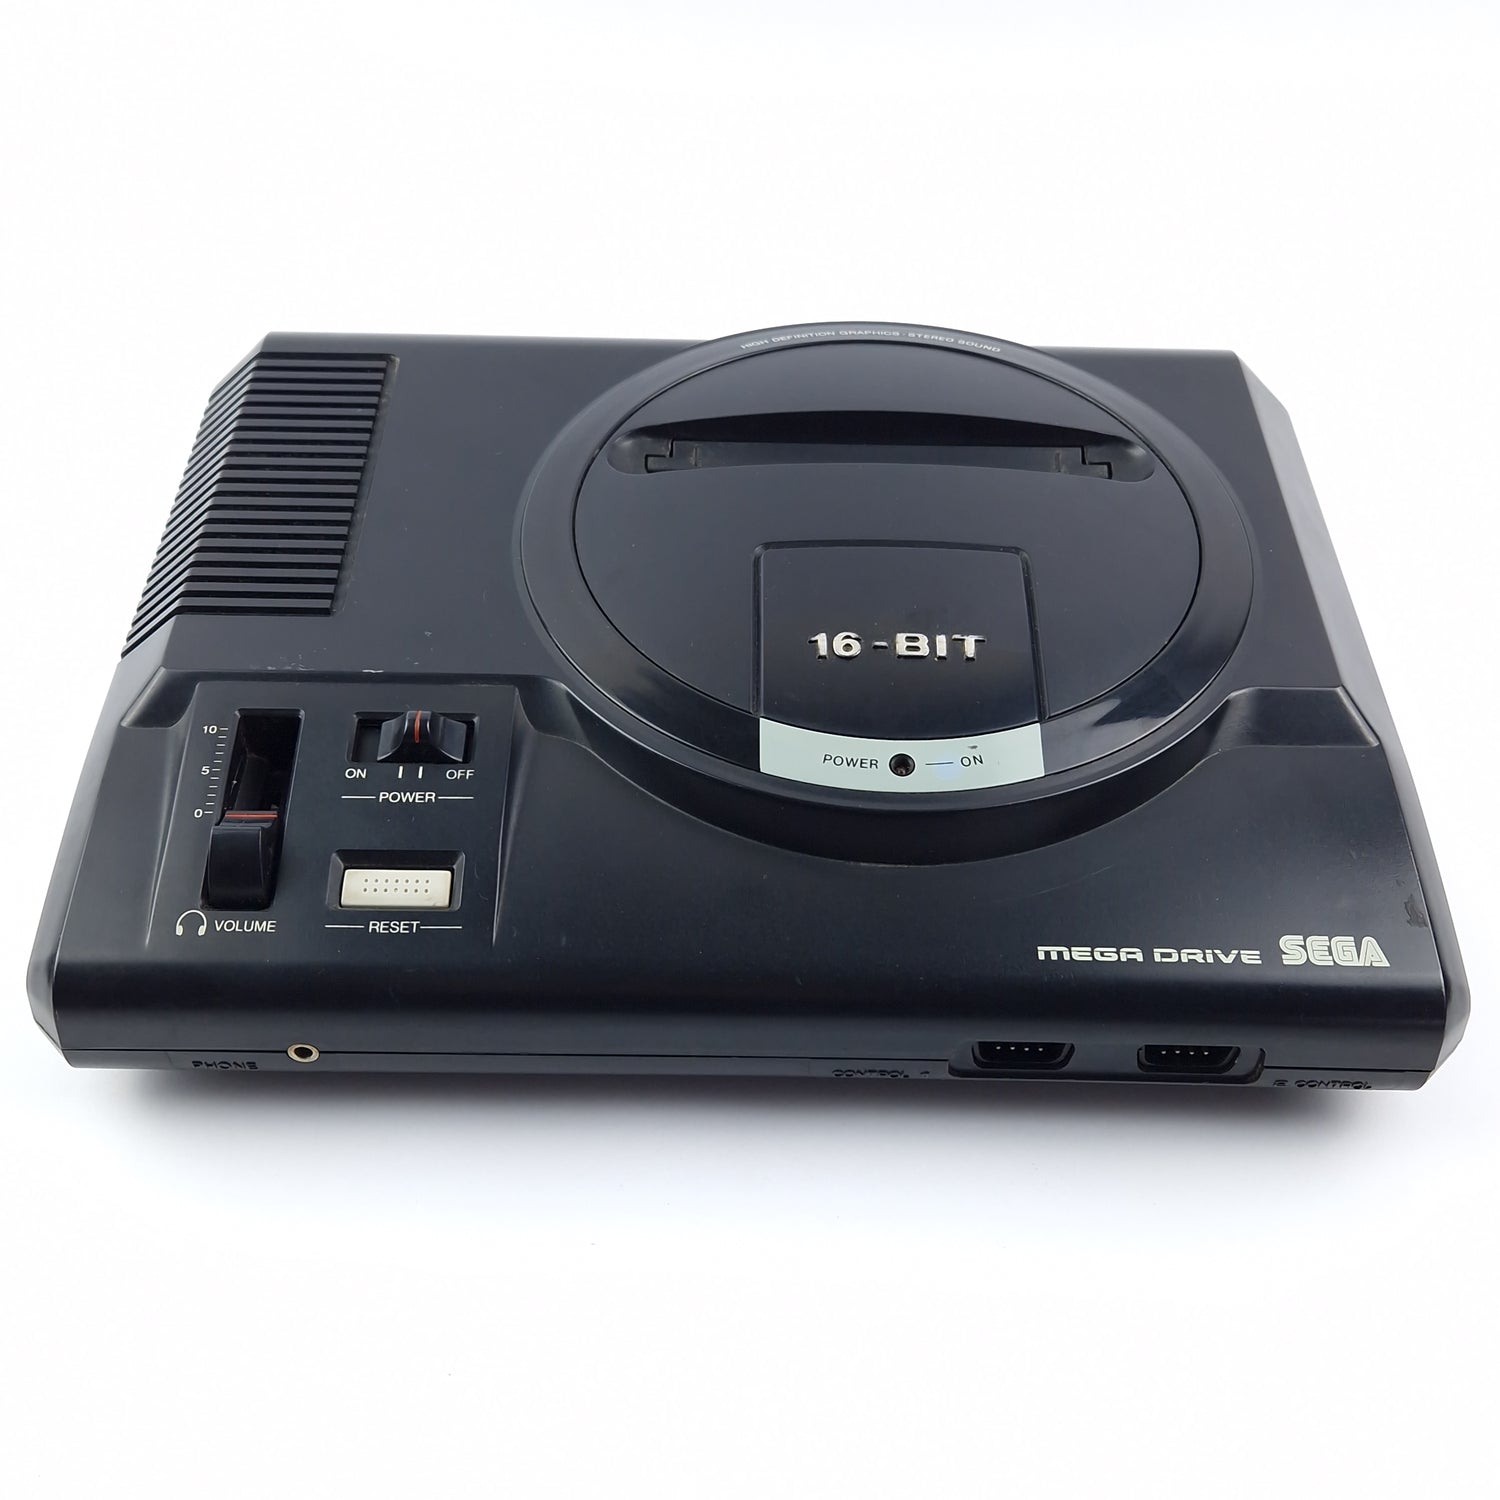 Sega Mega Drive I Konsole mit 2 Controller, 32X Adapter u. Stromkabel - Console